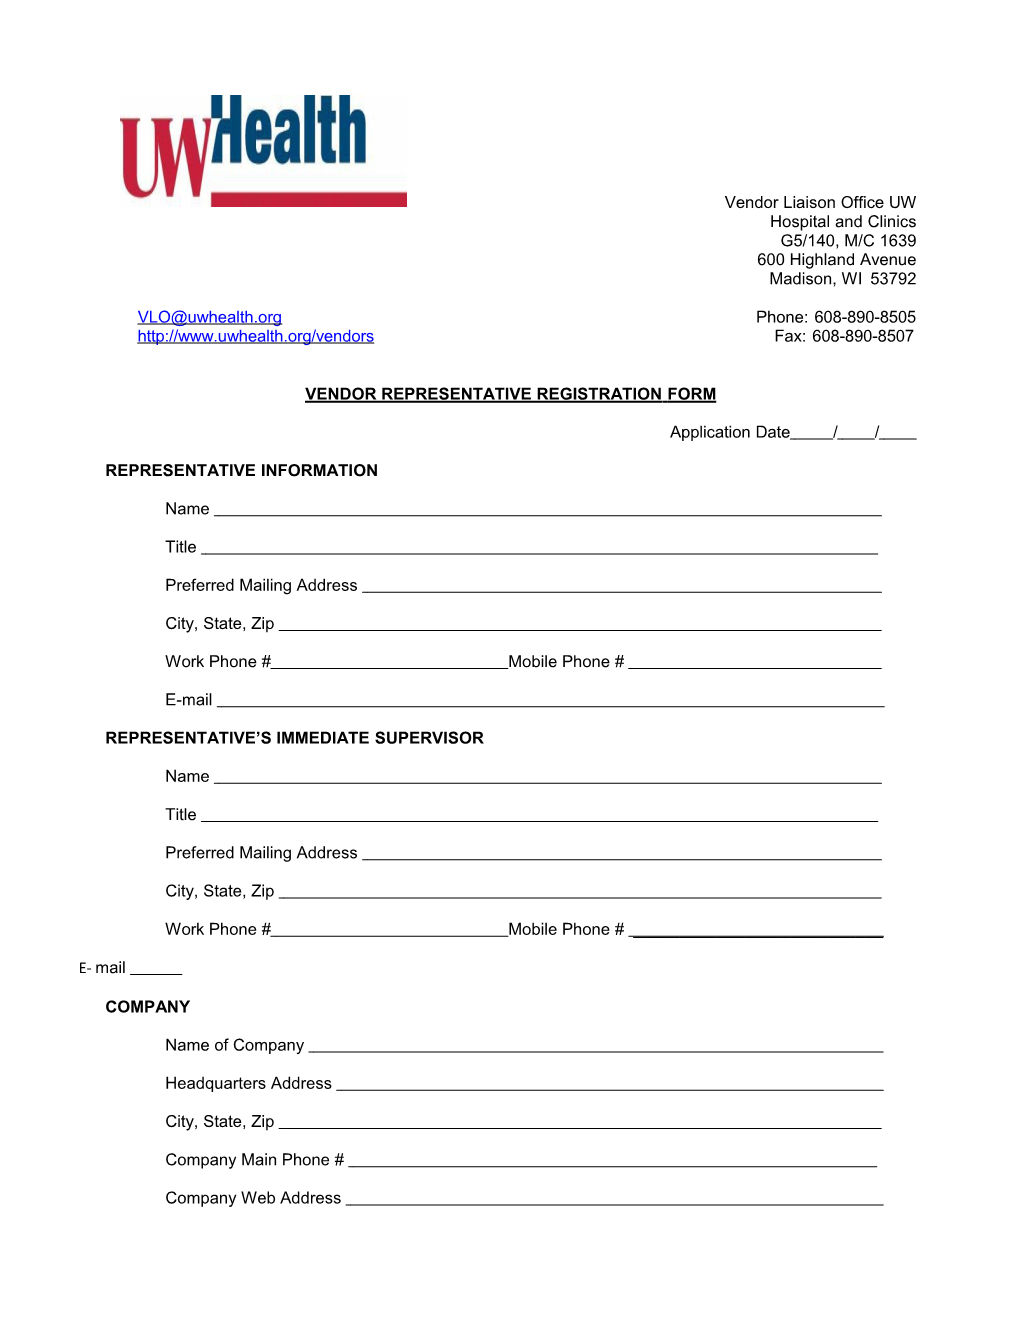 Sales Representative Registry Form